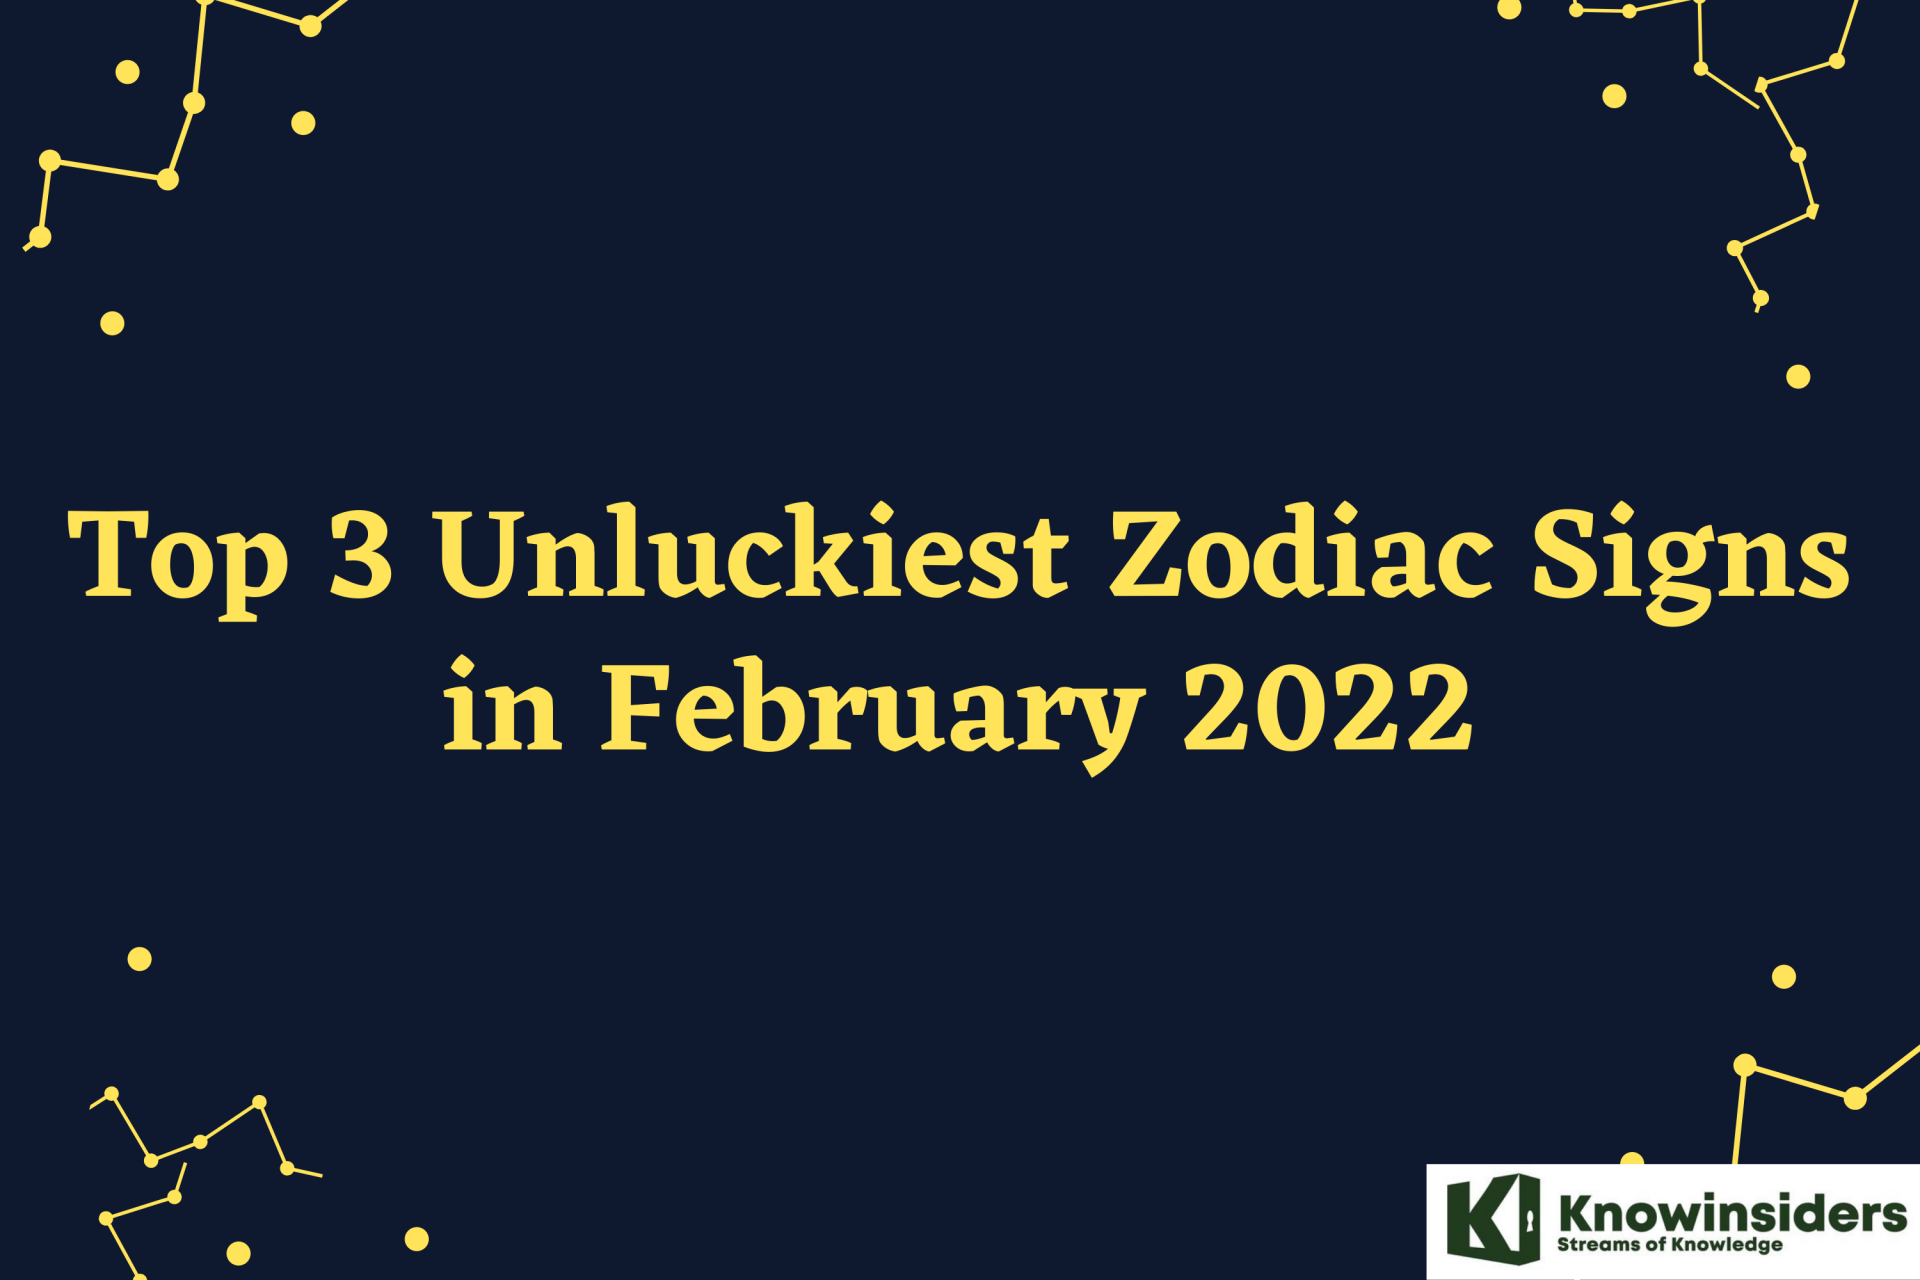 Top 3 Unluckiest Zodiac Signs in February 2022